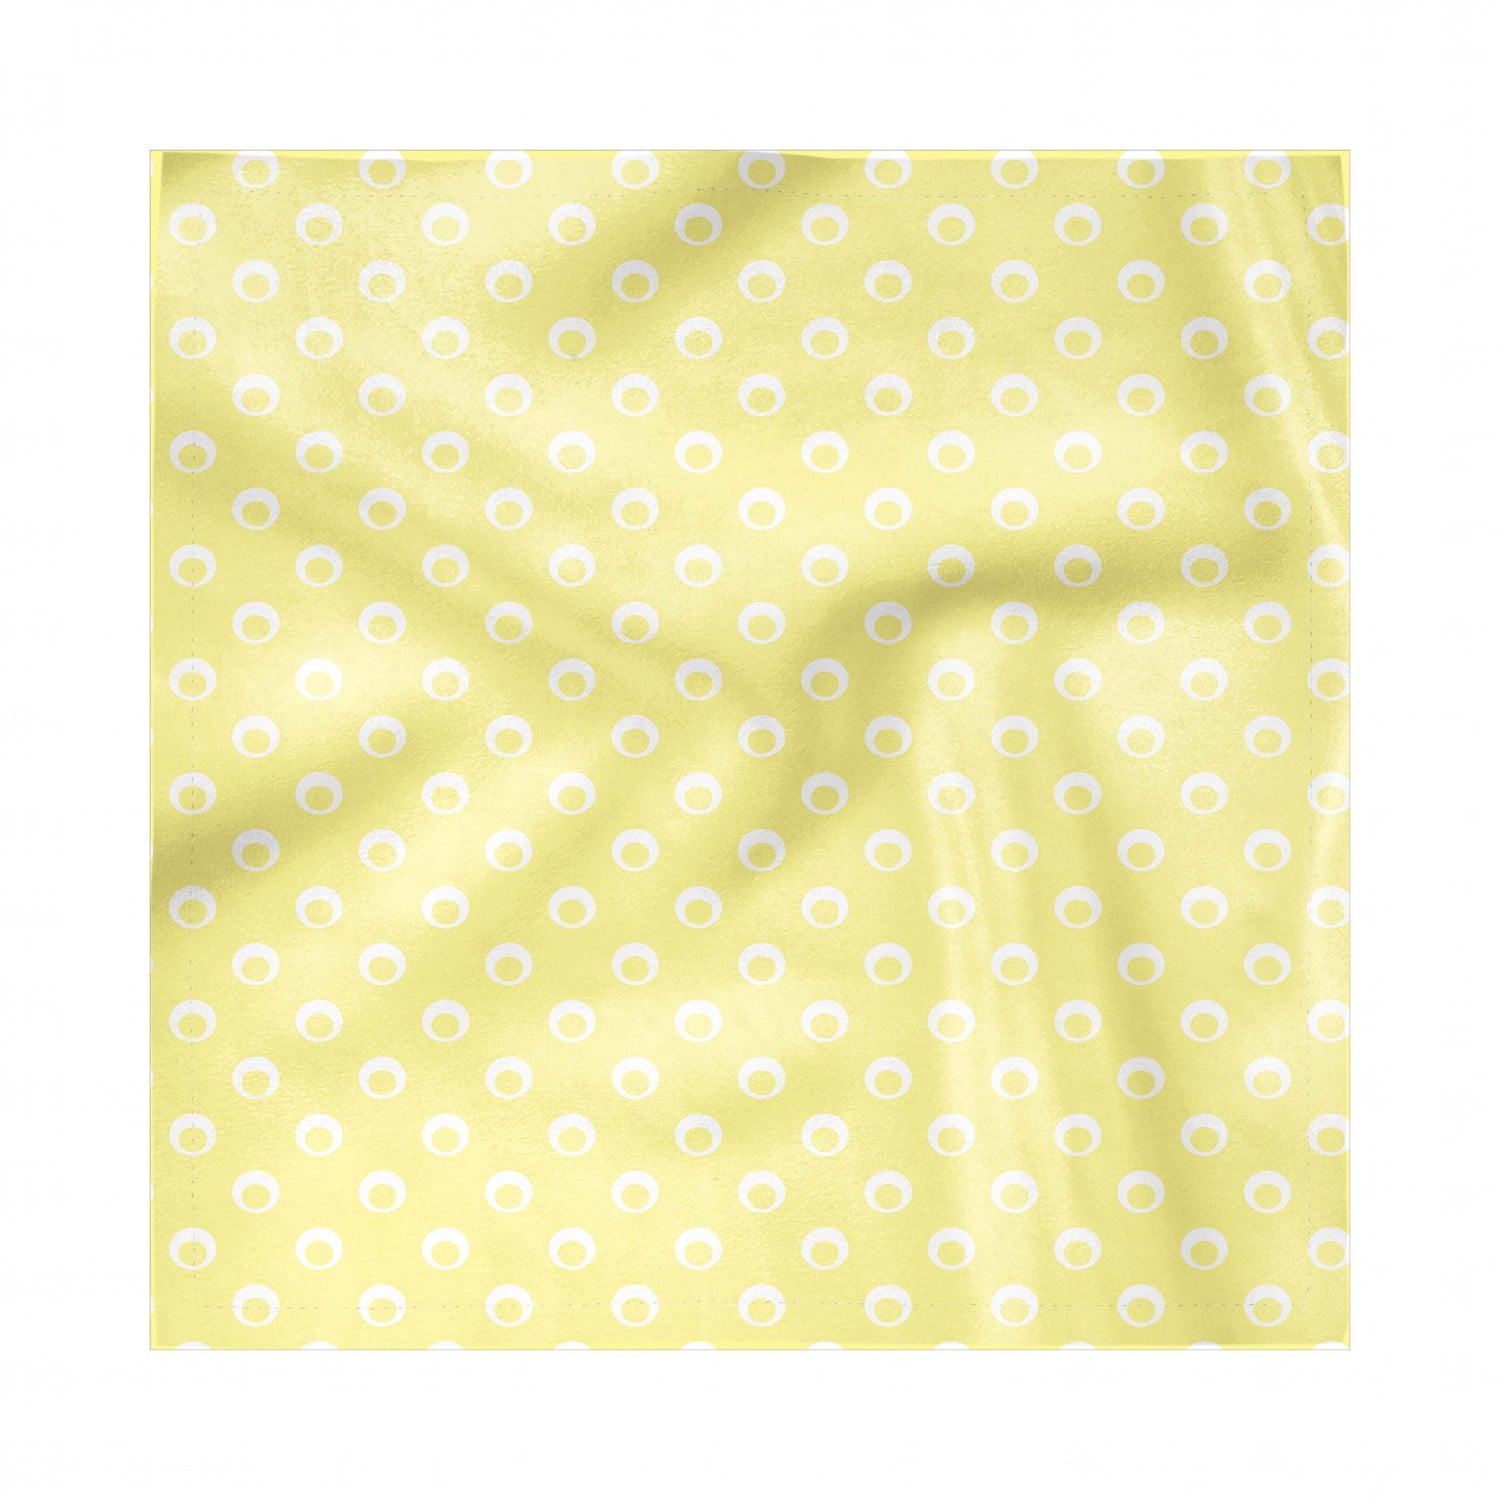 Linen napkin and polka dot cotton